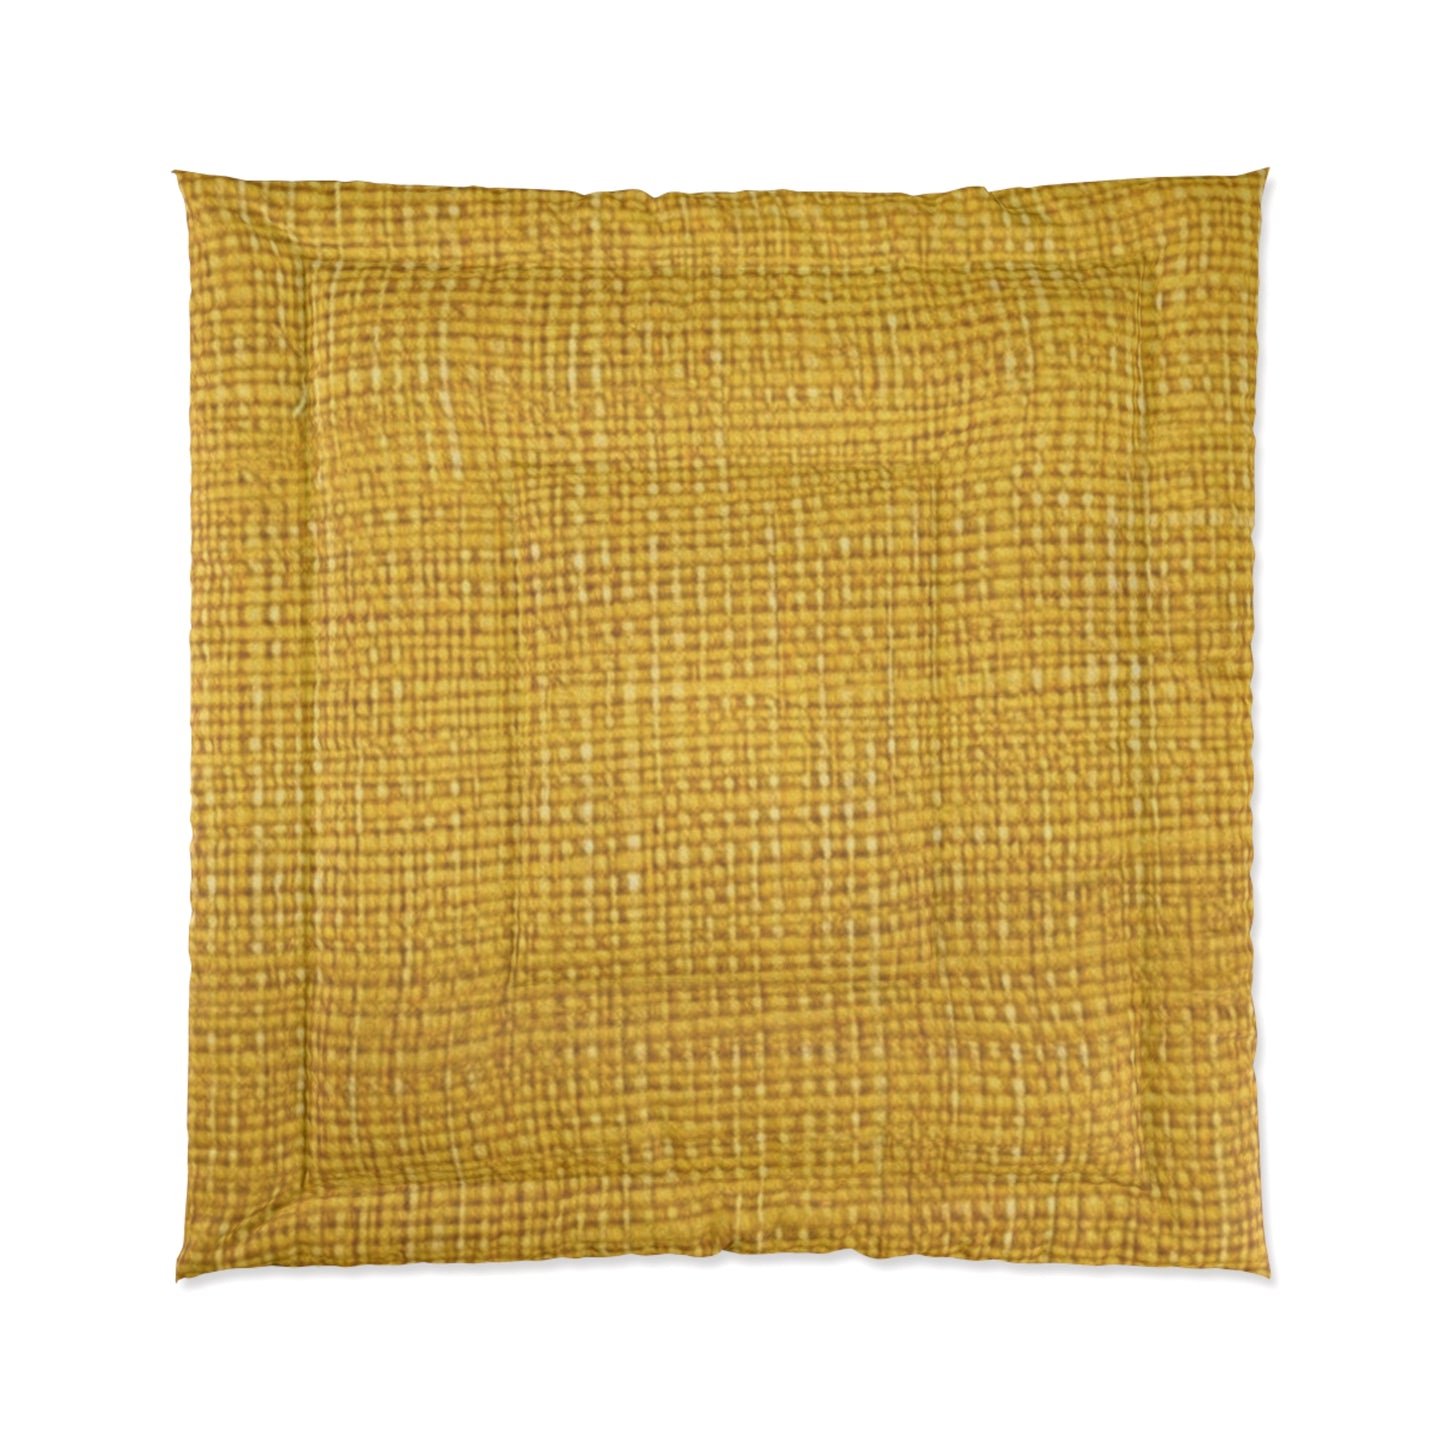 Radiant Sunny Yellow: Denim-Inspired Summer Fabric - Comforter